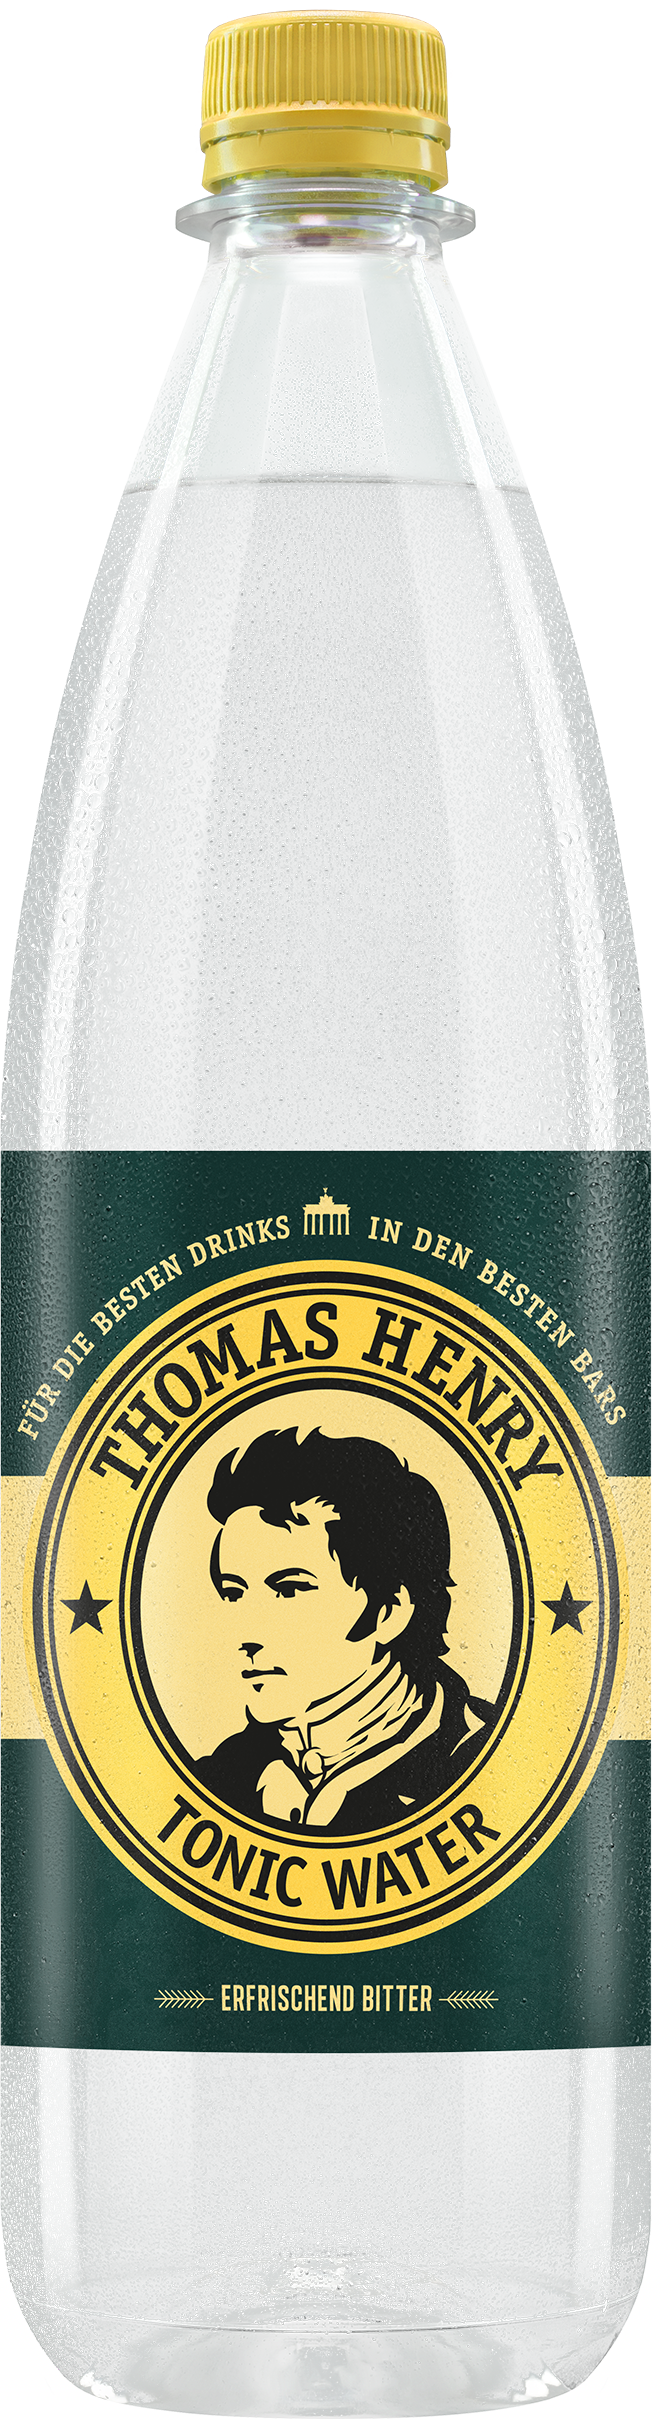 Thomas Henry Tonic Water